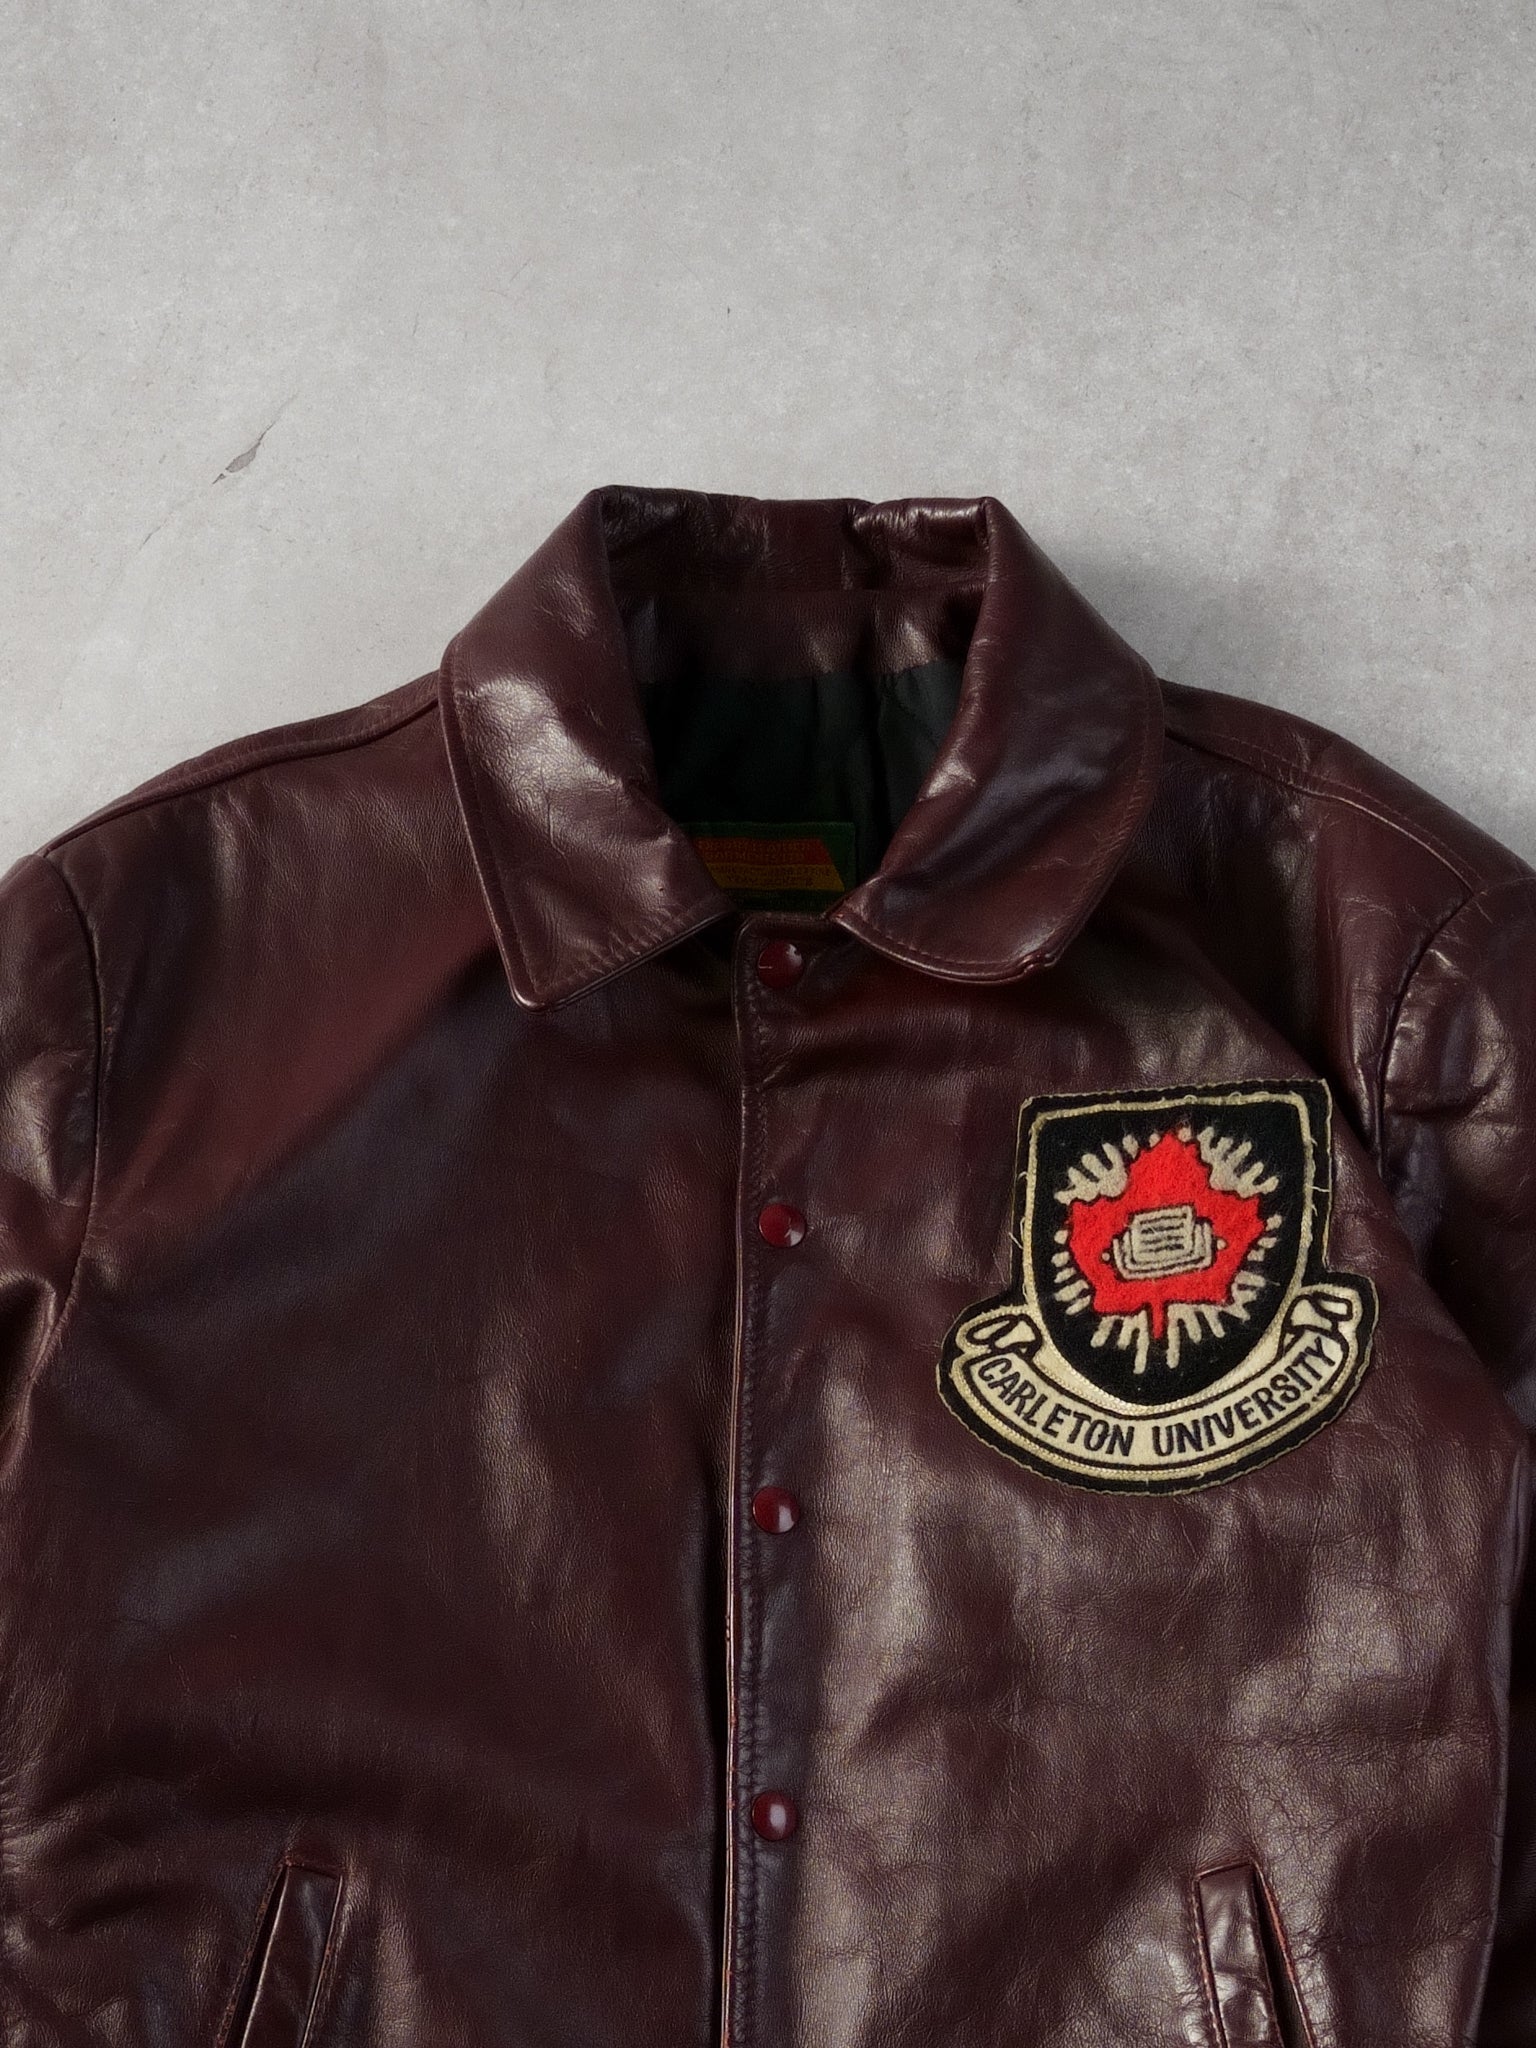 Vintage 89' Maroon Carleton University Emblem Collared Leather Jacket (M/L)